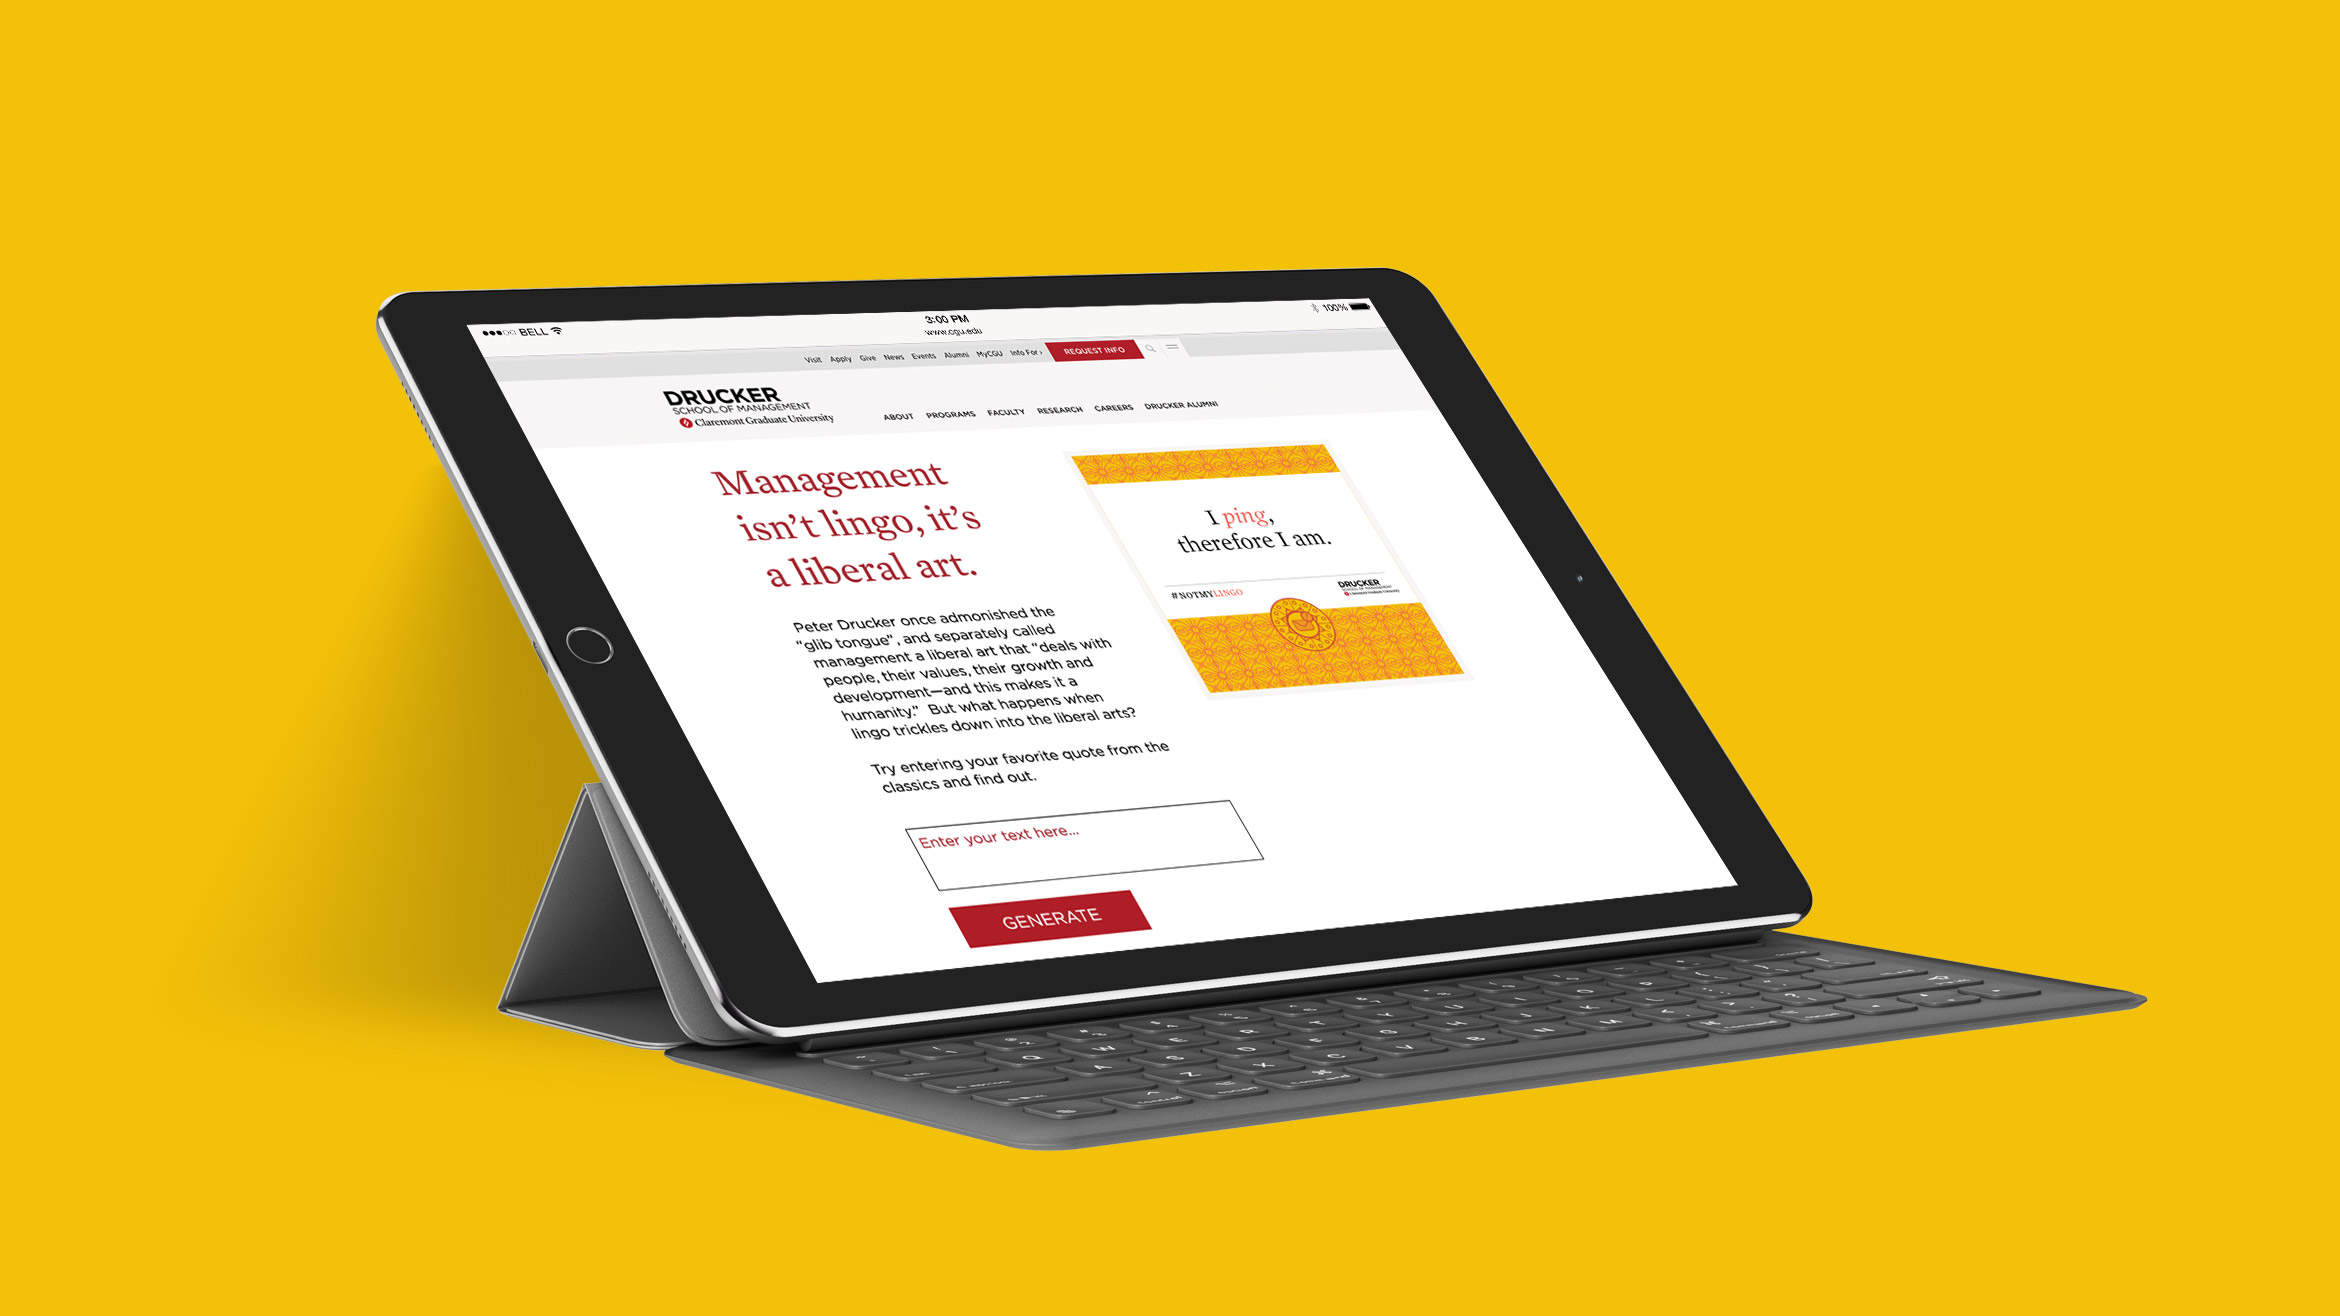 Drucker School of Management Website iPad Mockup designed by Kilter